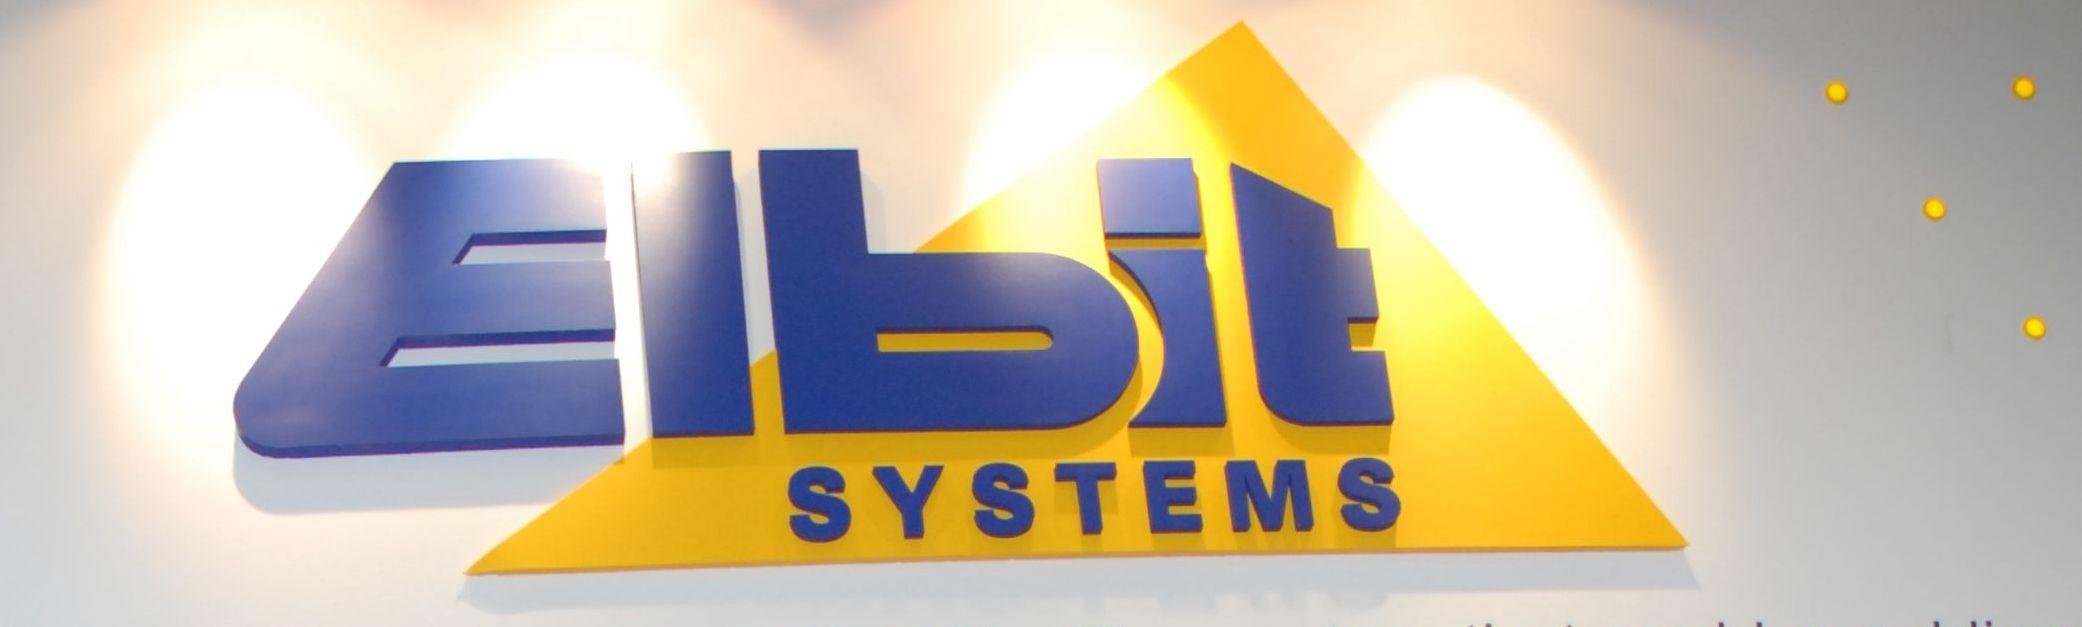 Elbit Logo - Elbit Systems